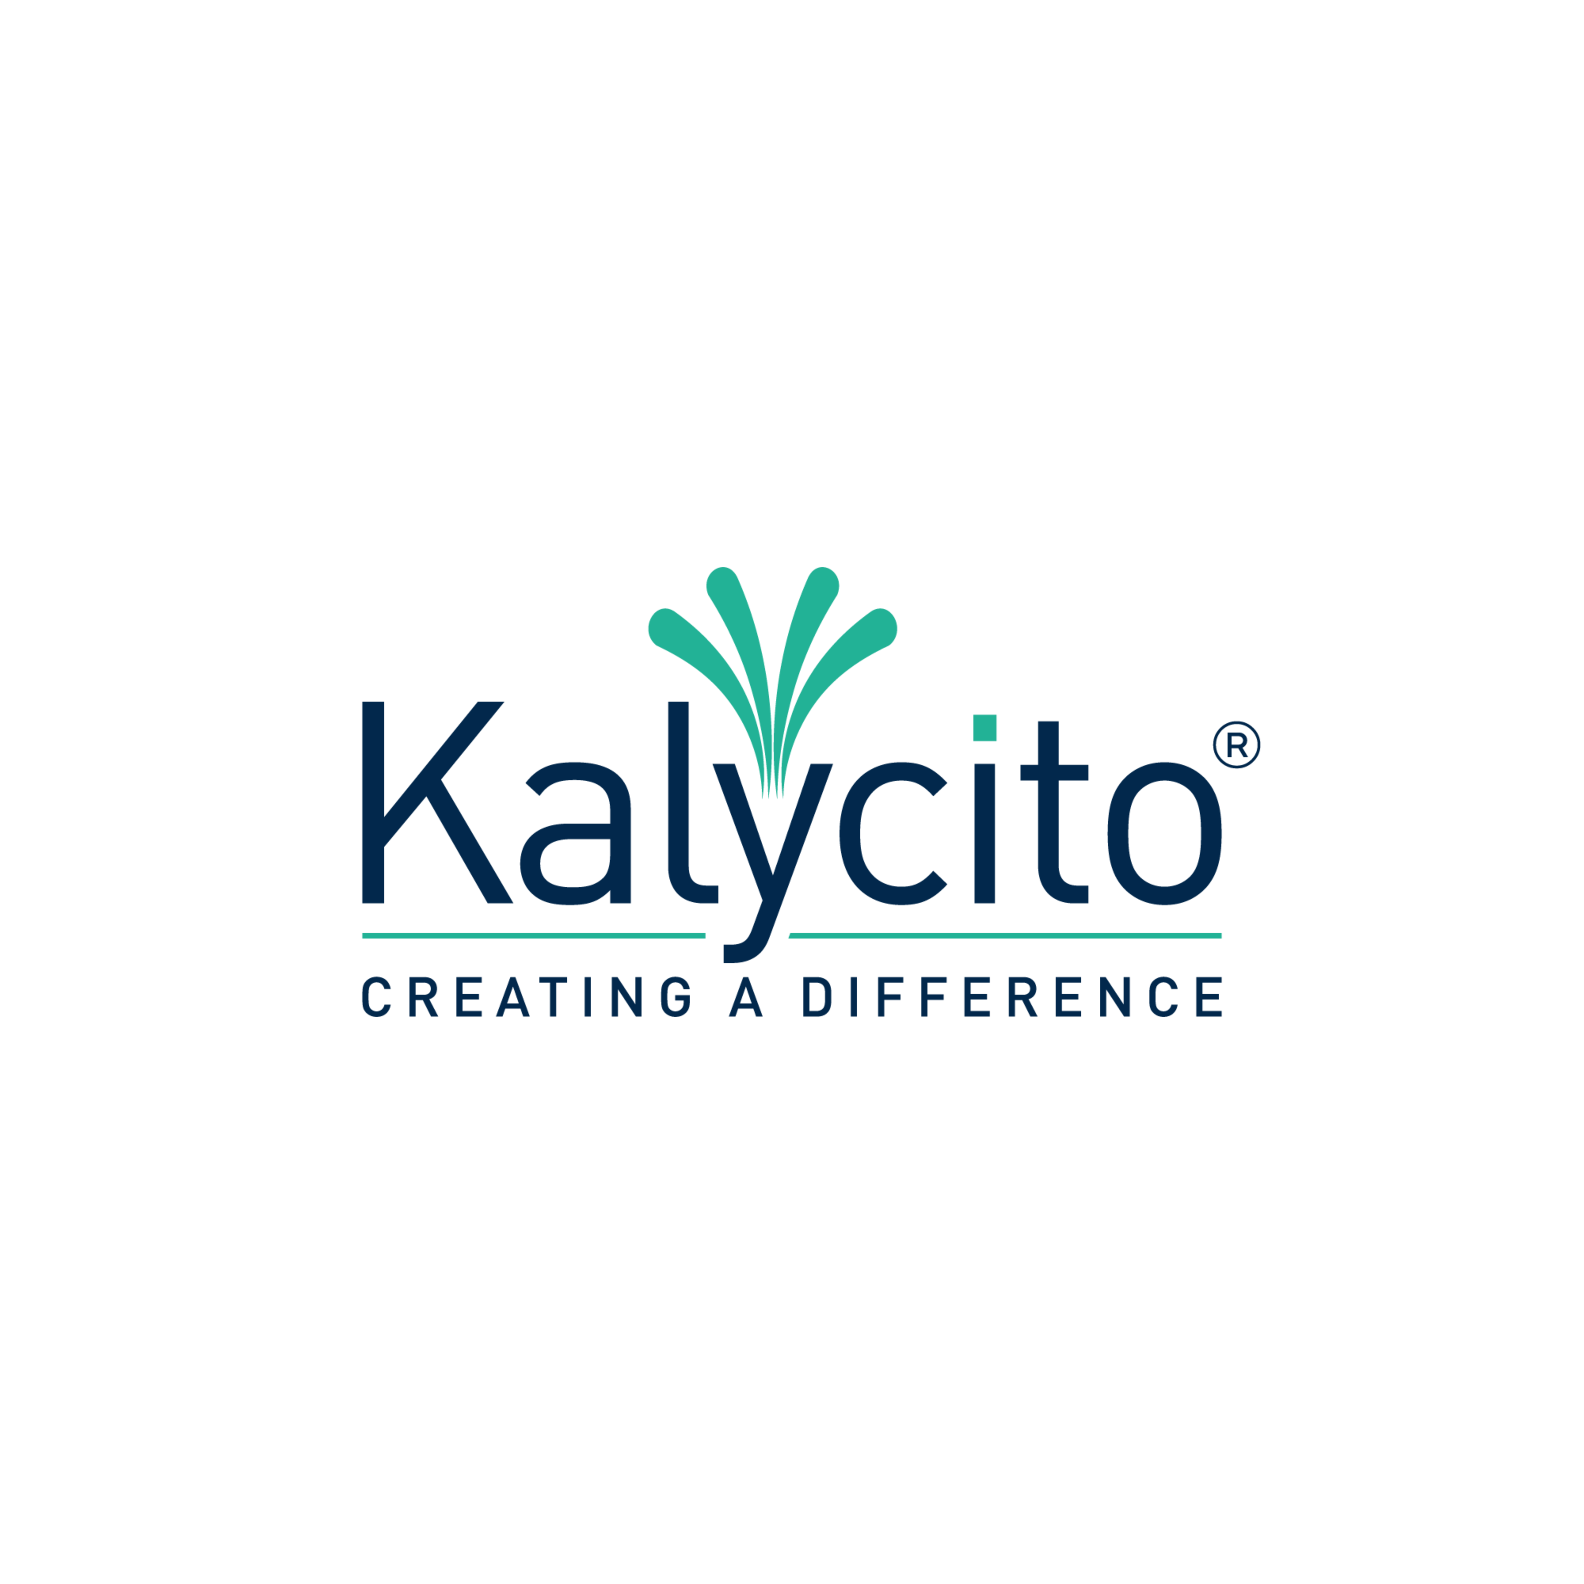 Kalycito